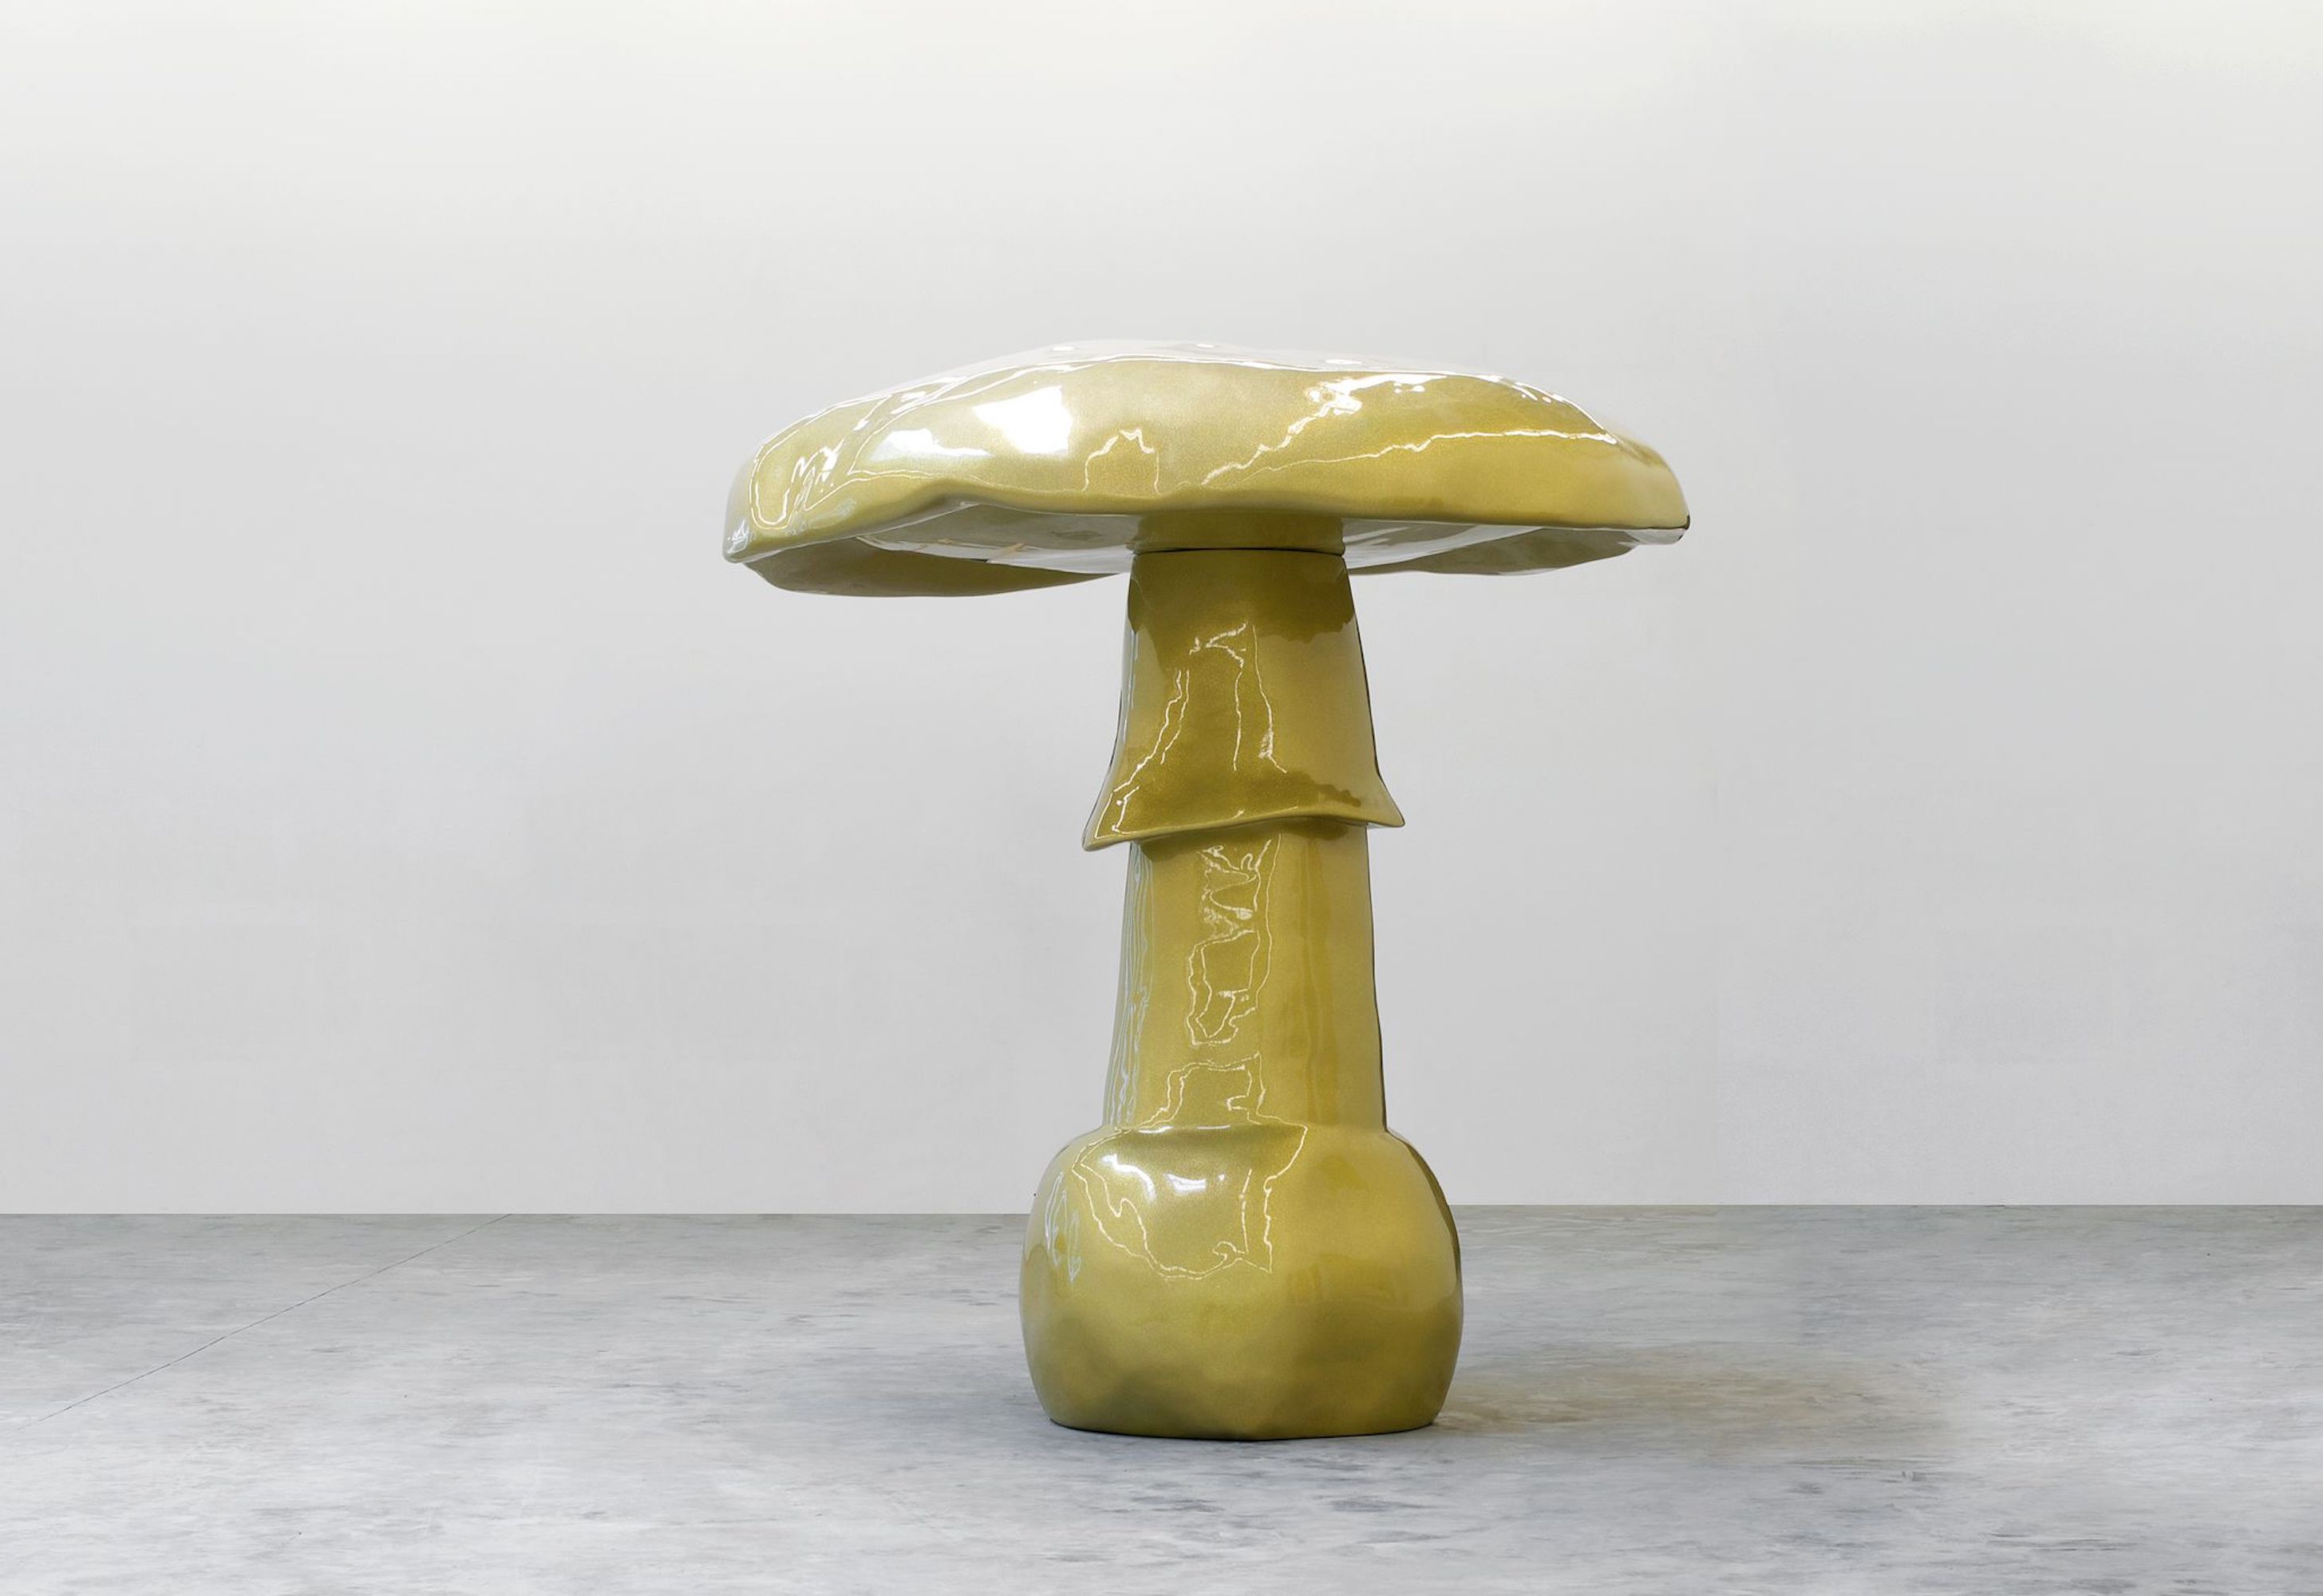 Mushroom Autowave Rich-Gold Petzold silber F14', 2008 by Sylvie Fleury